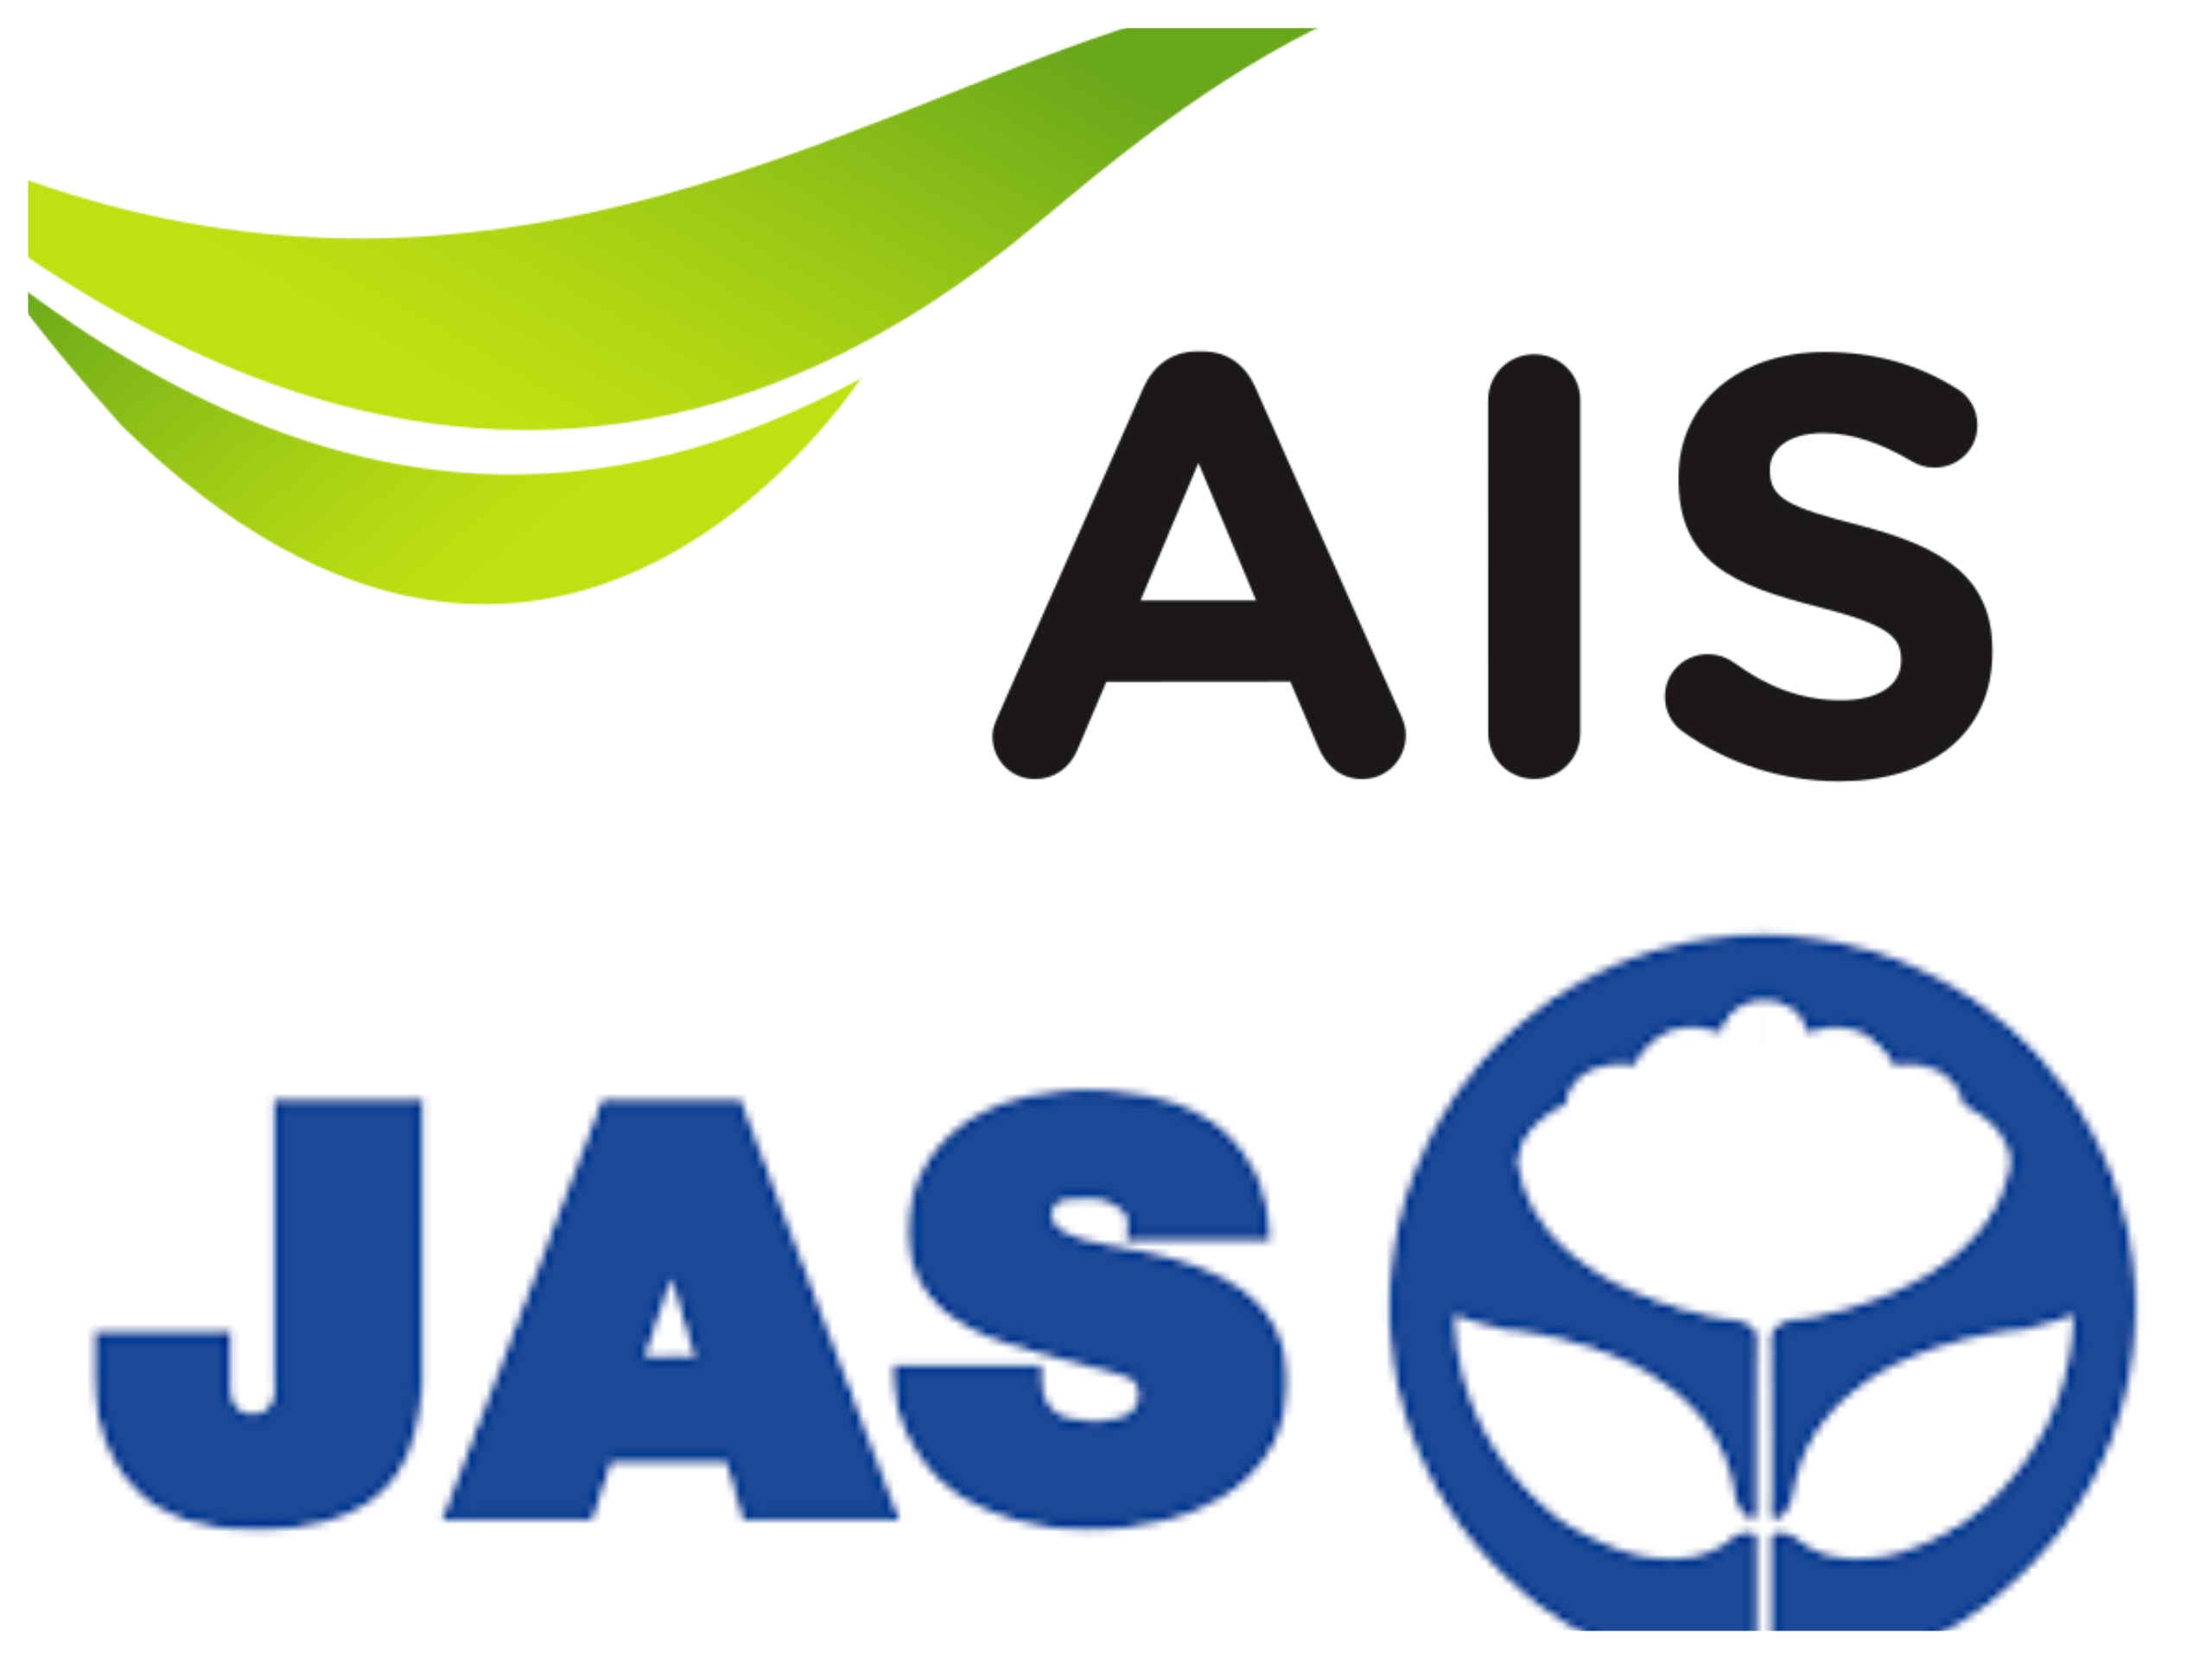 AIS ประกาศซื้อ 3BB และเงินลงทุนใน JASIF 19% จาก JAS  พร้อมให้บริการลูกค้าเน็ตบ้านครอบคลุมทั่วไทย